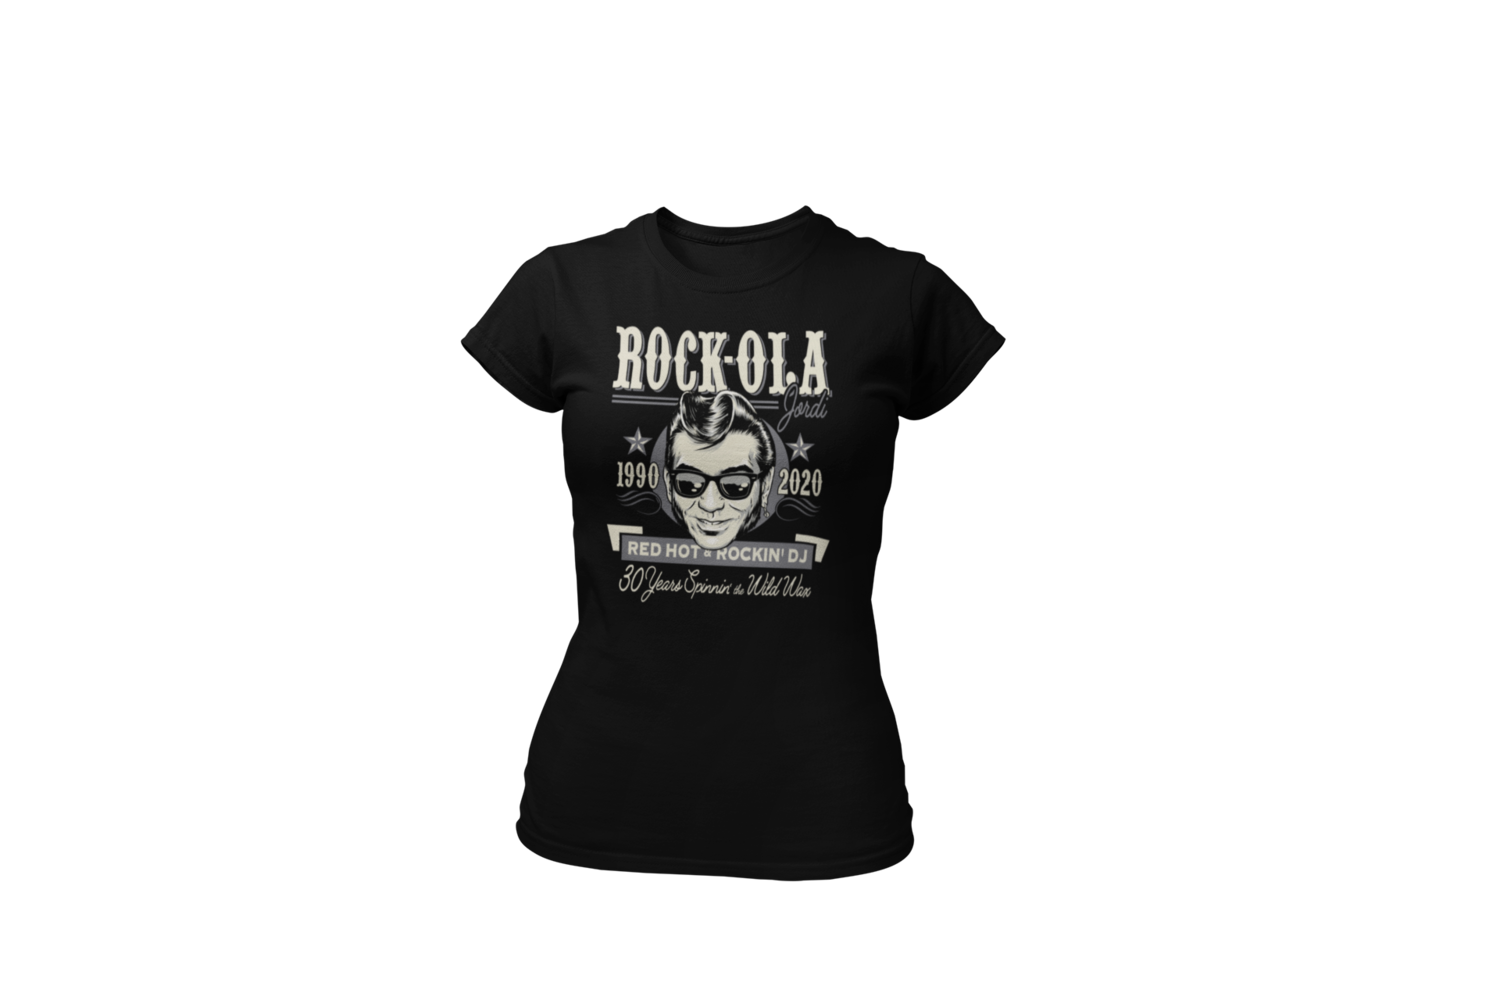 Rock-ola Jordi Dj tshirt
T-SHIRT WOMAN